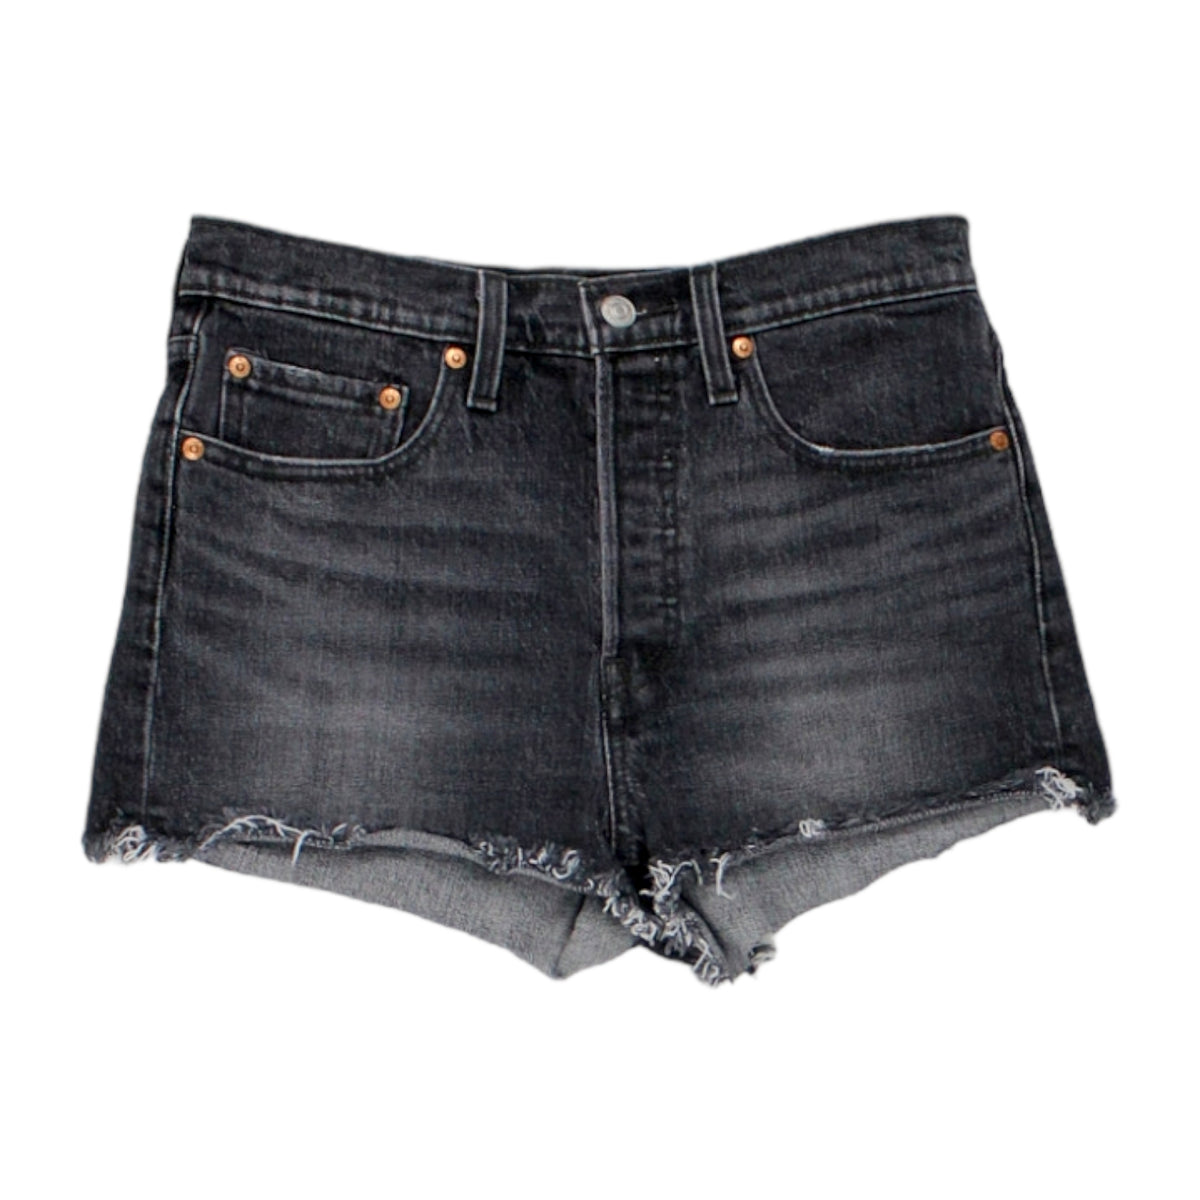 Levi's 501 Black Denim Cut-Off Shorts